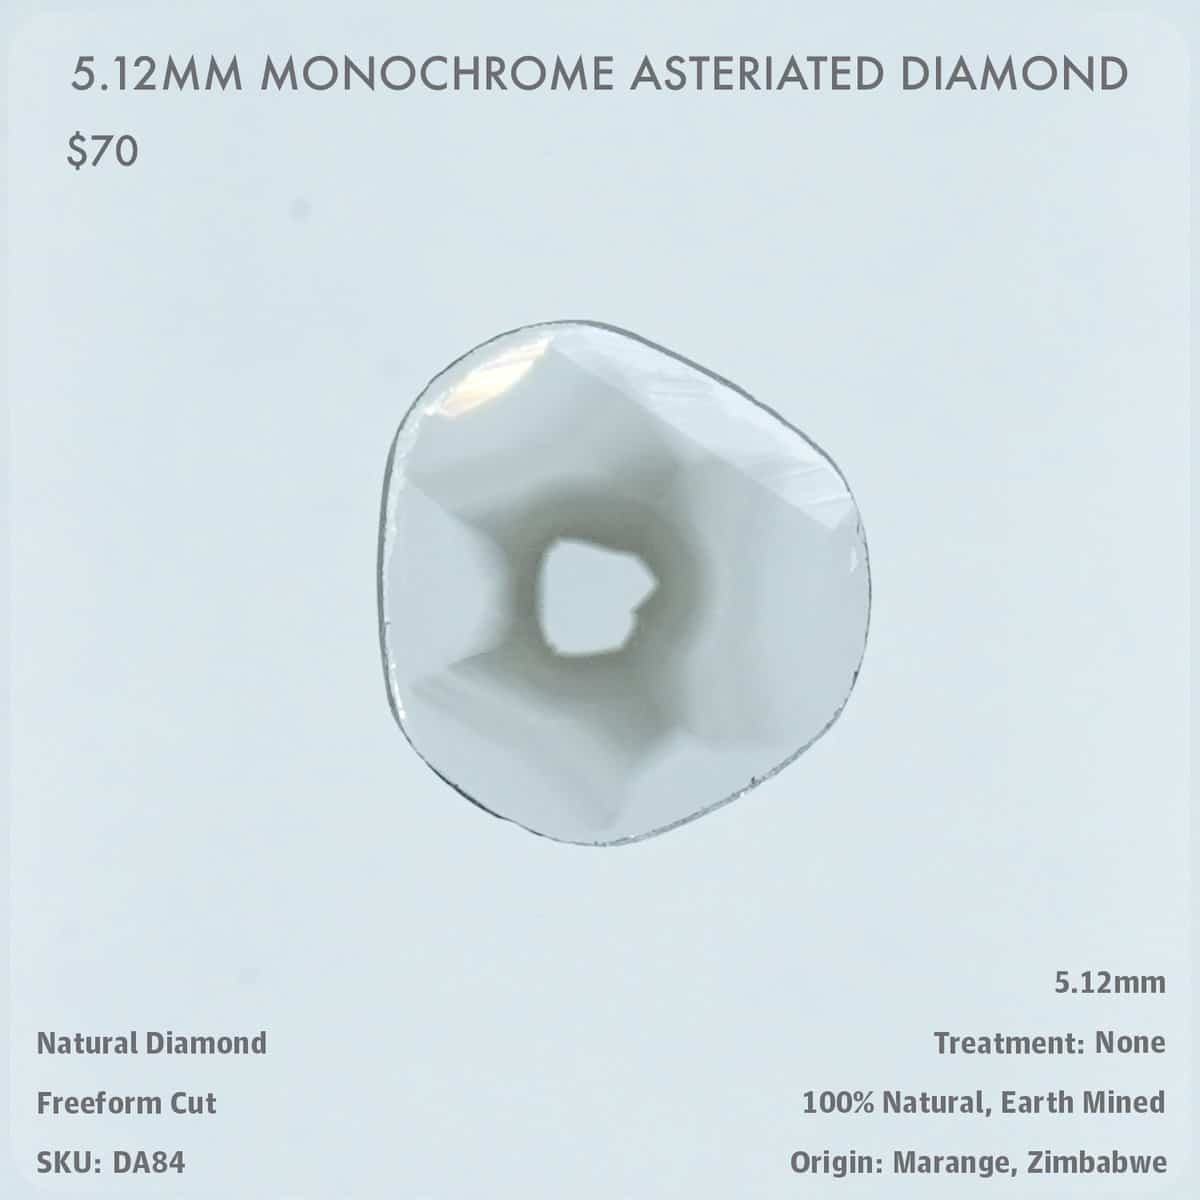 5.12mm Monochrome Asteriated Diamond